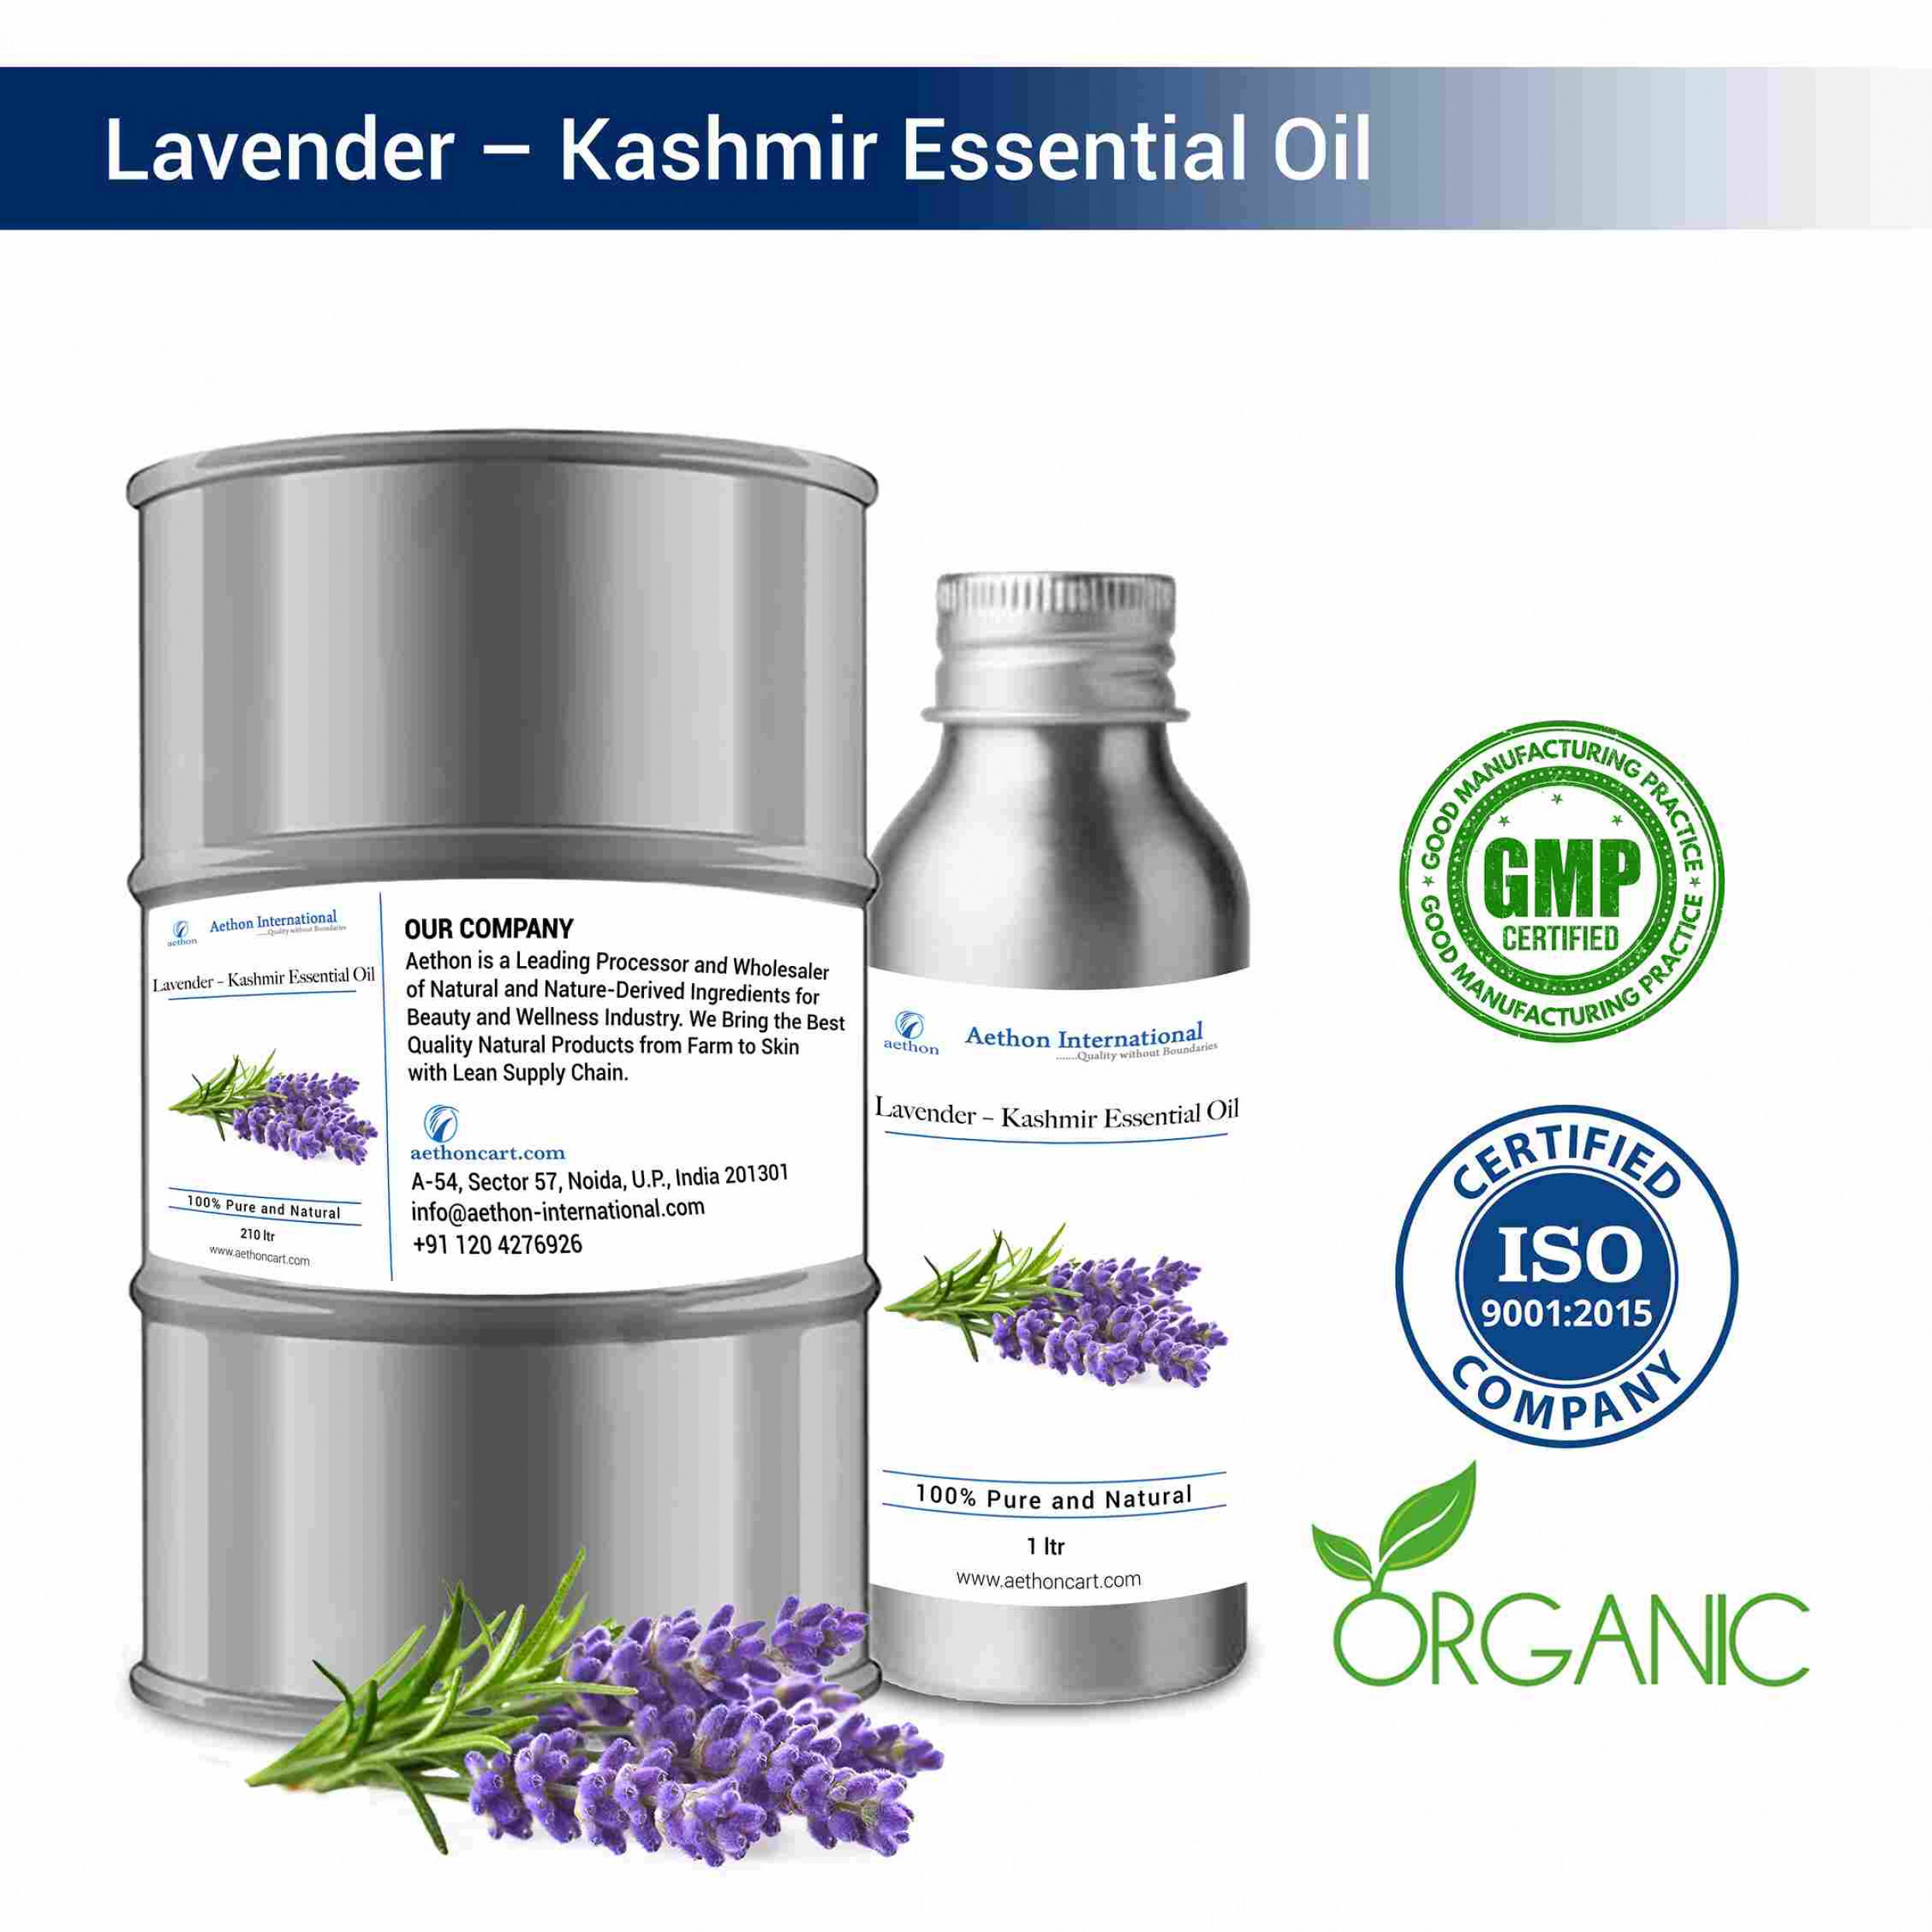 Lavender – Kashmir Essential Oil